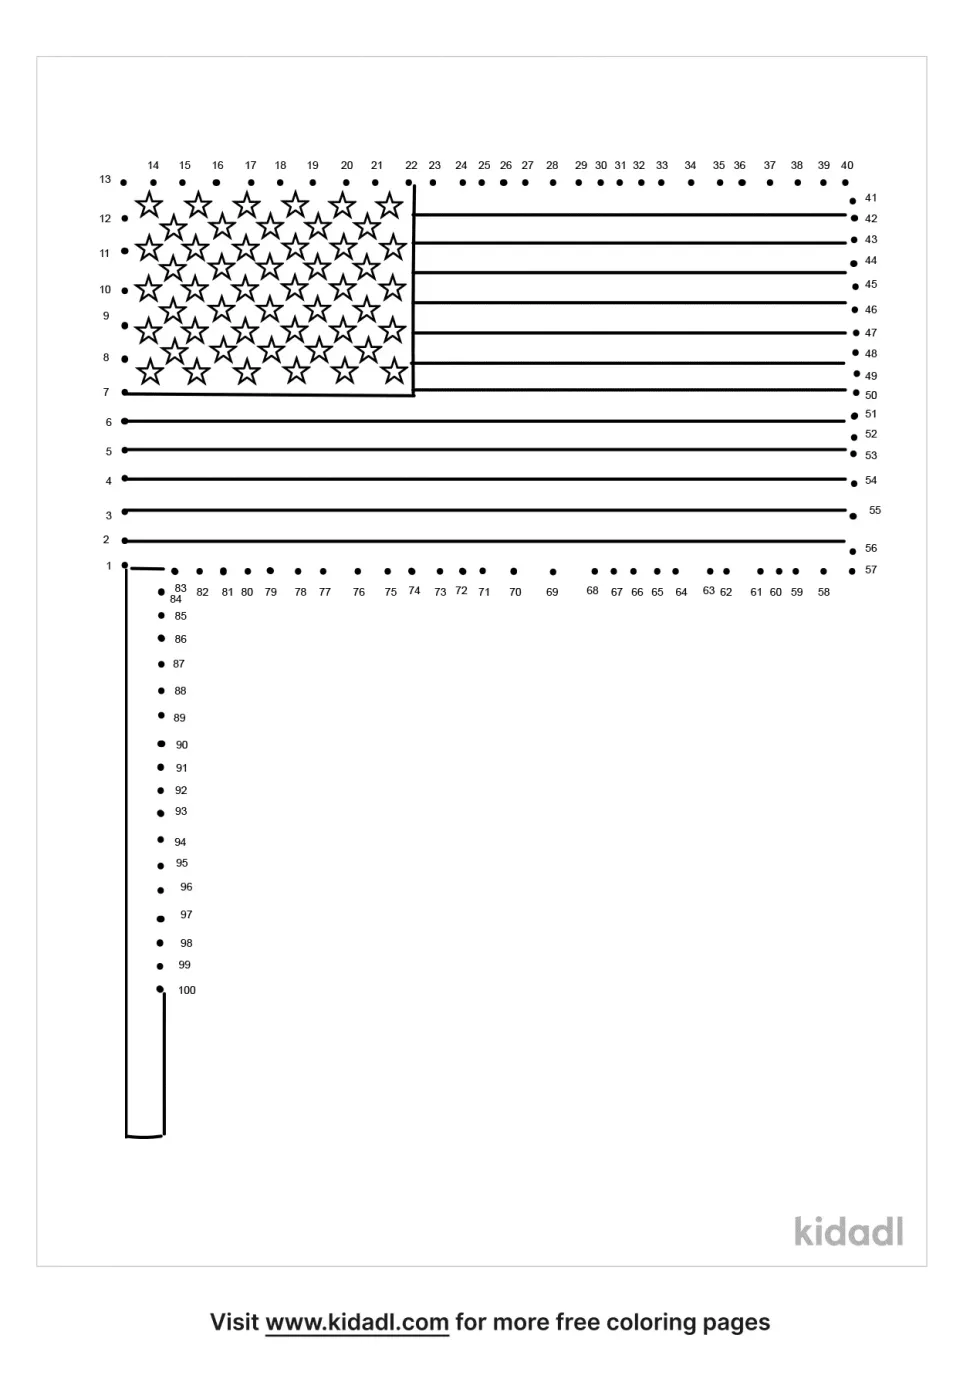 American Flag | Kidadl